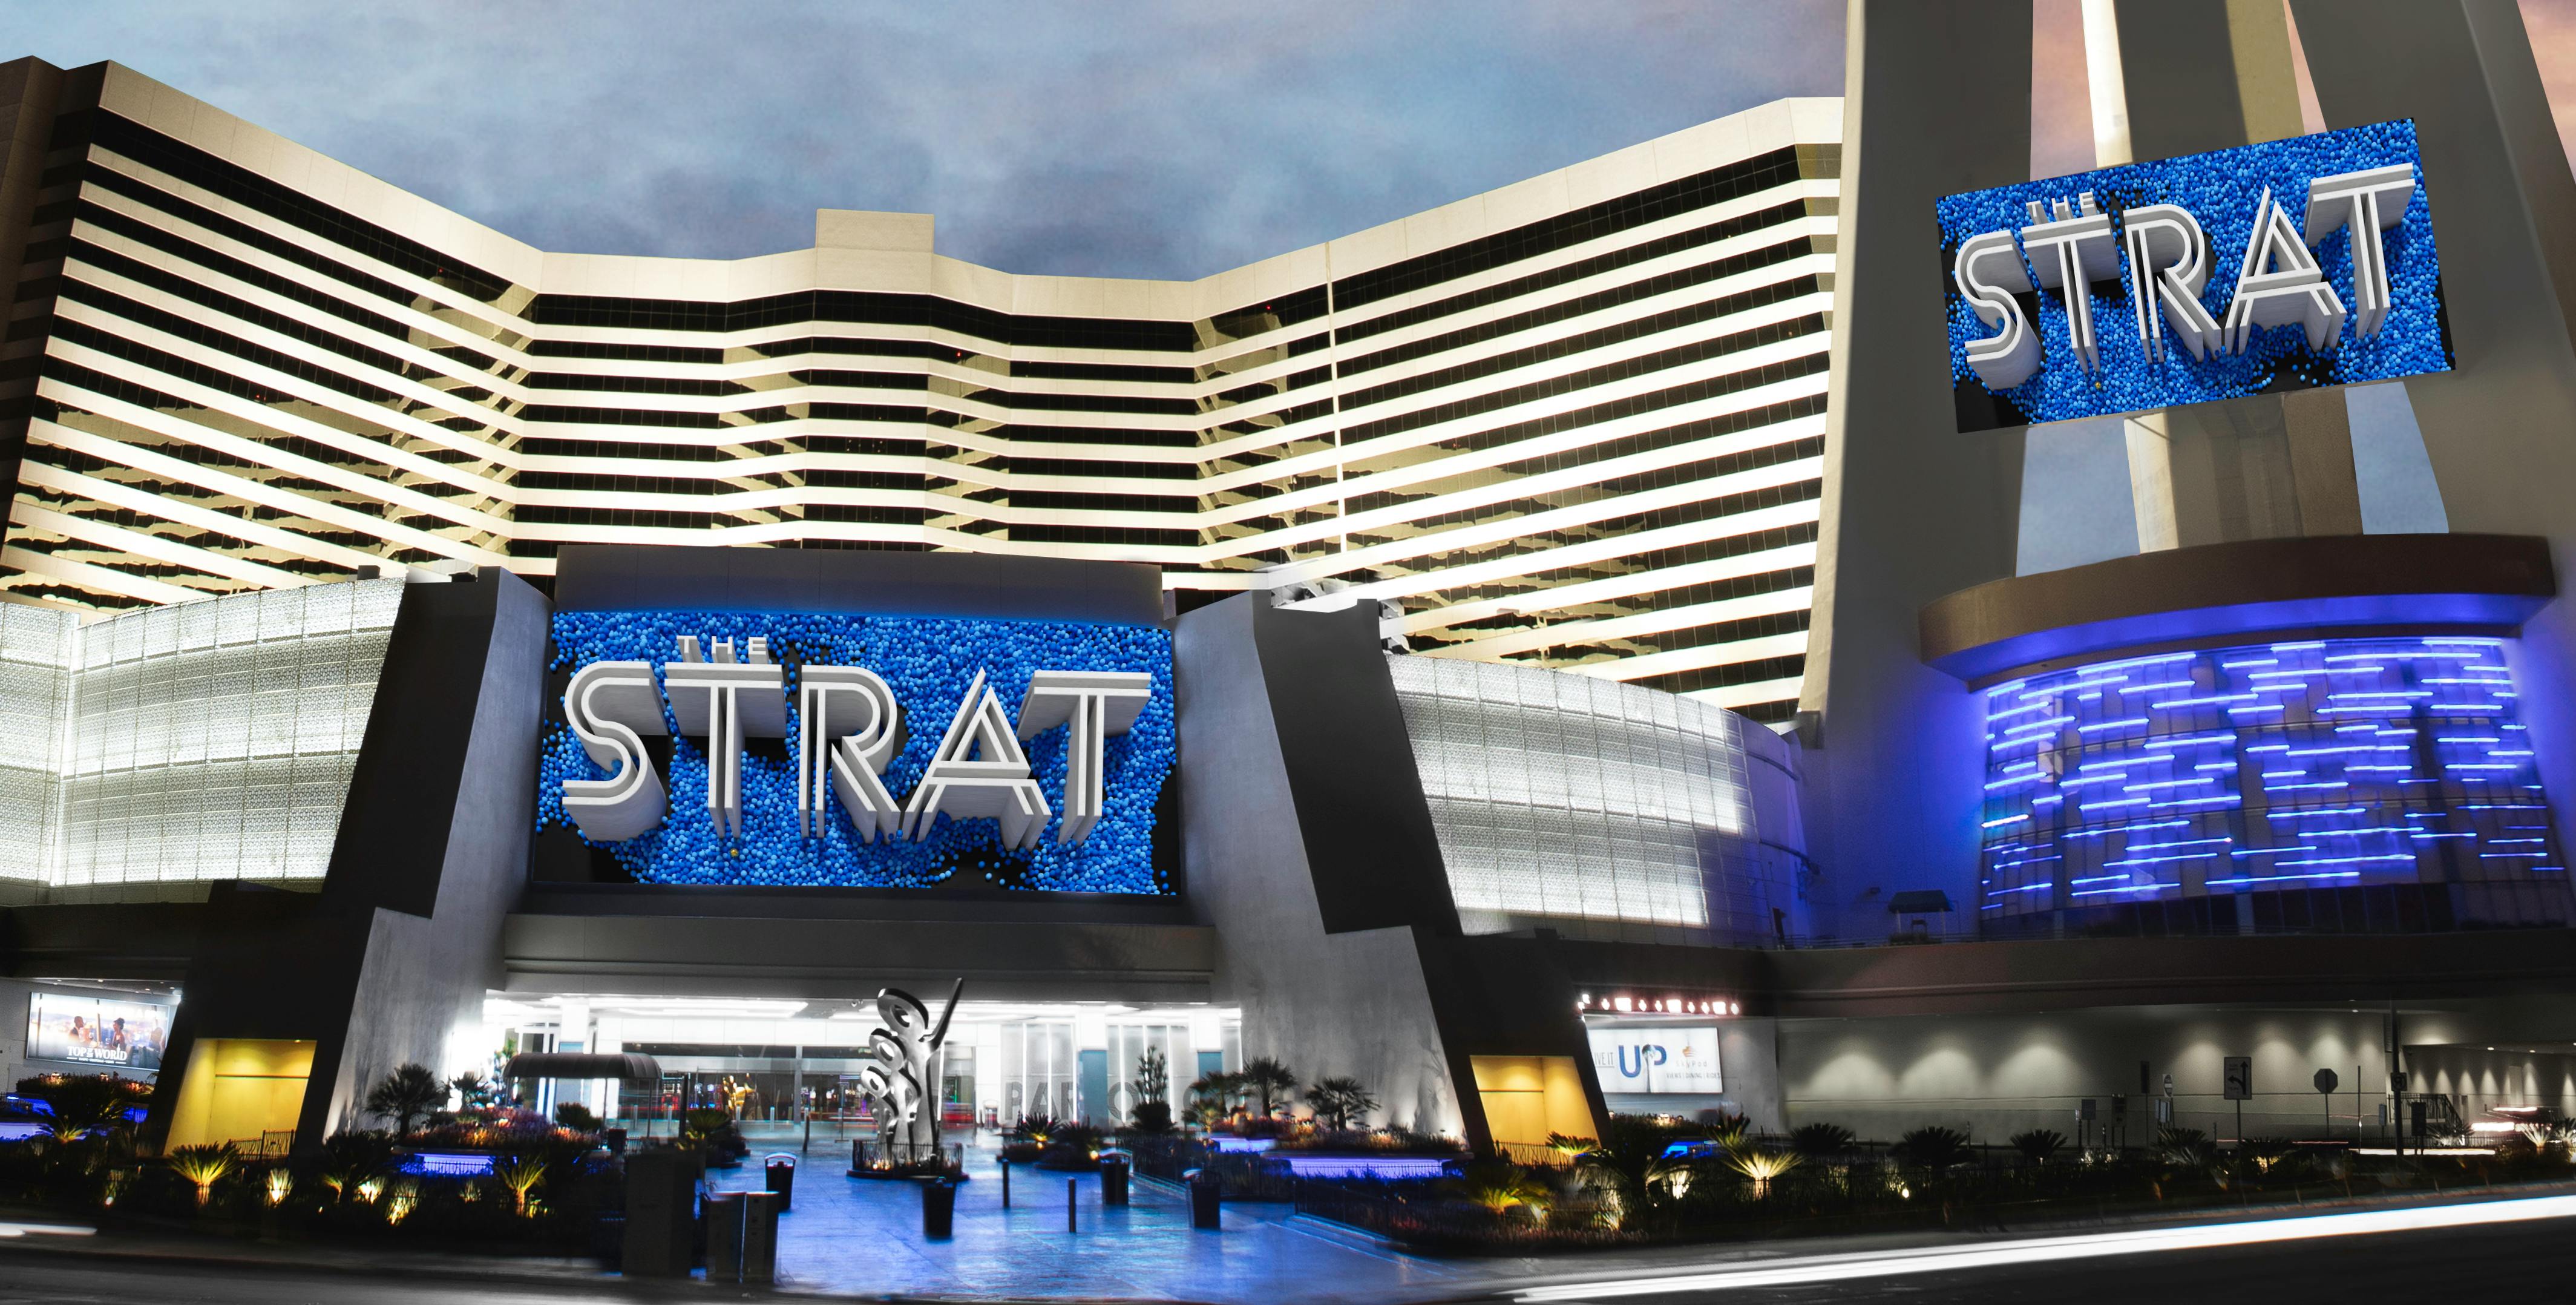 Stratosphere Casino, Hotel & Tower: observatiedek en spannende attracties